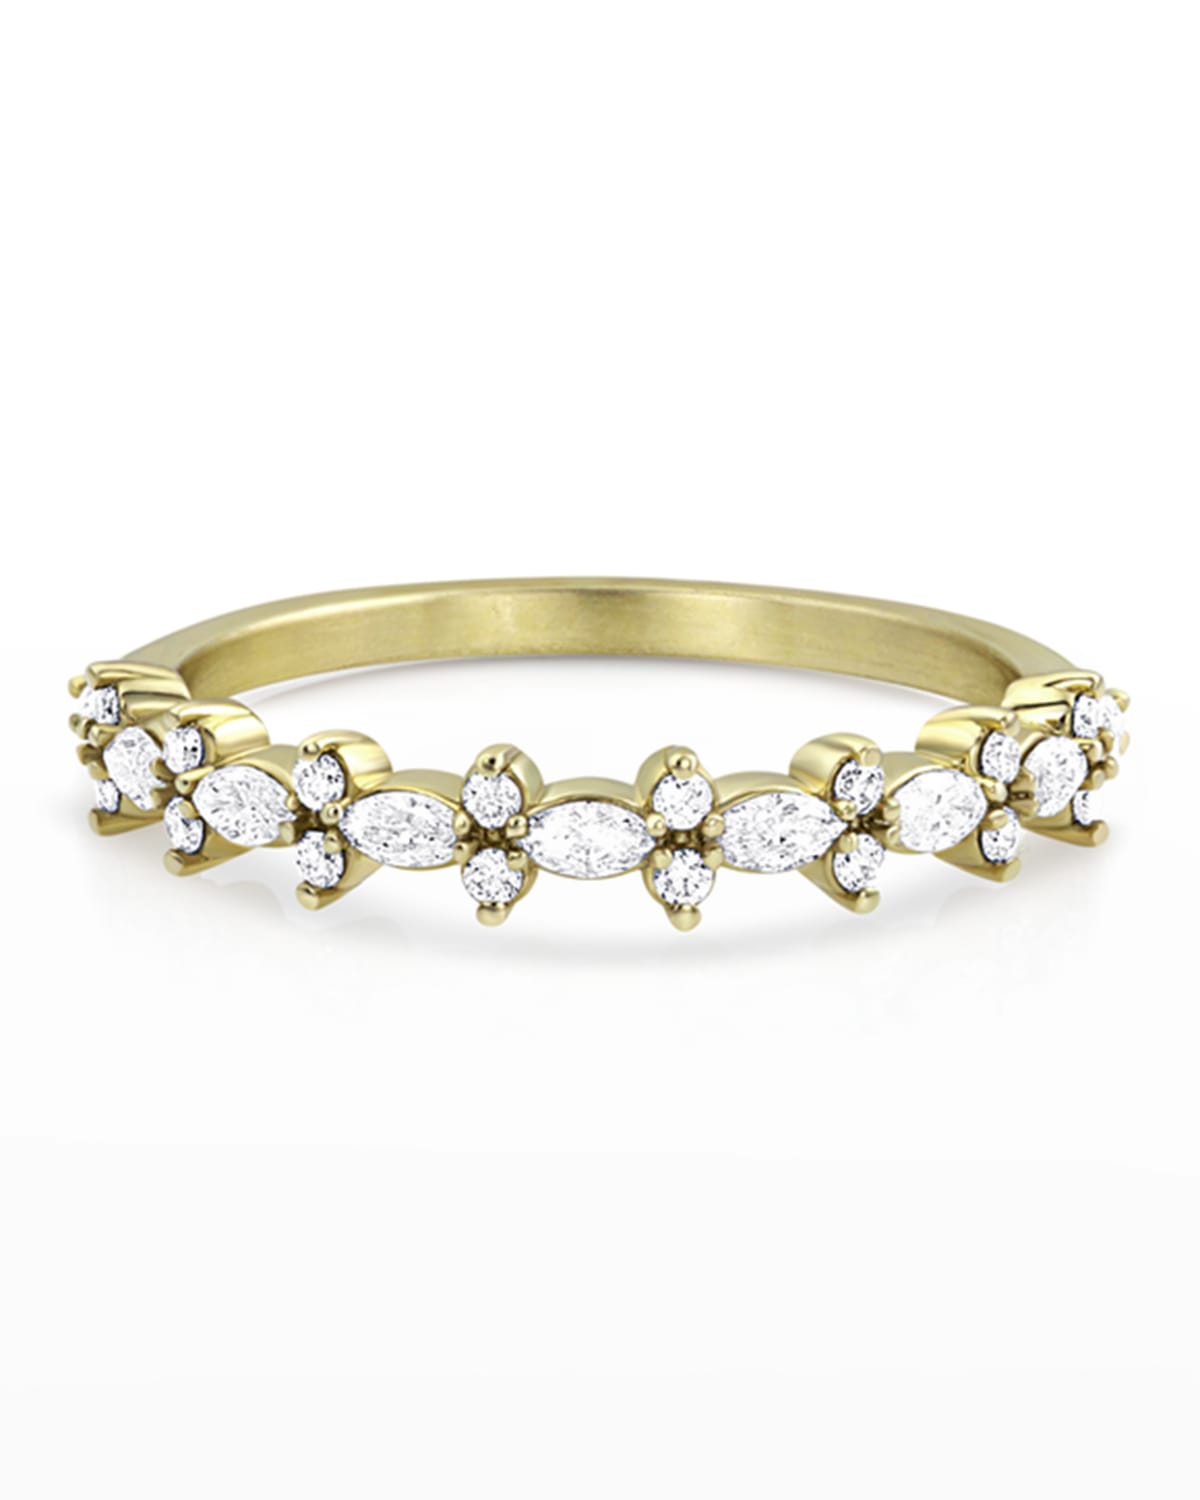 Dominique Cohen 14k Gold Diamond Crown Stack Ring, Size 7